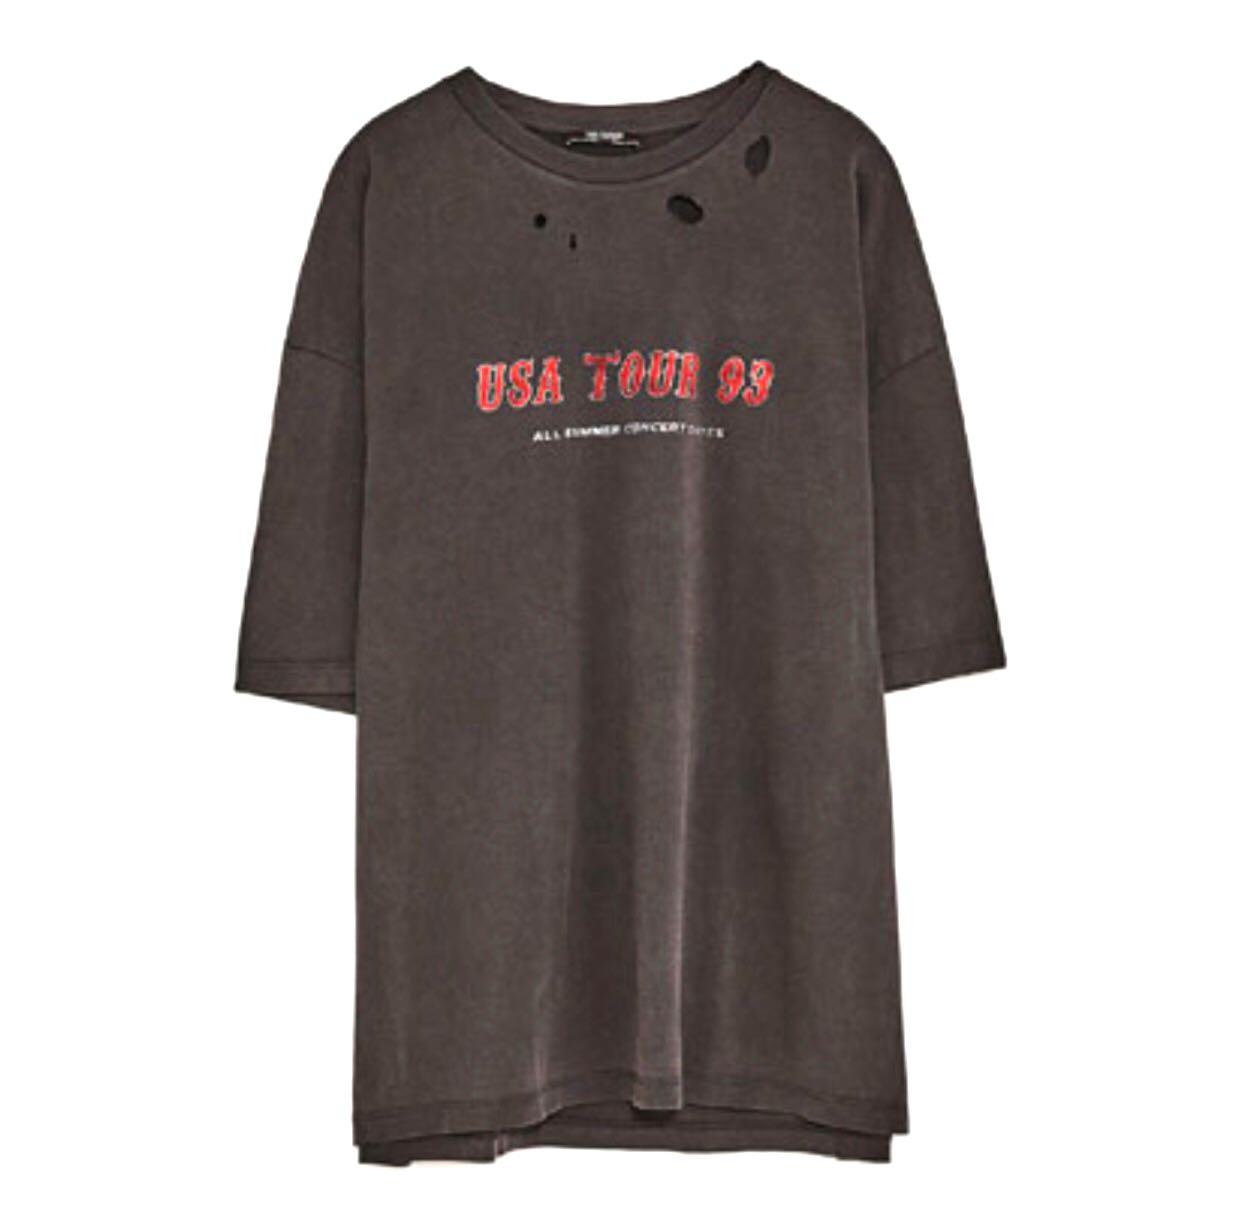 Zara USA Tour Vintage 93 Ripped T-shirt 